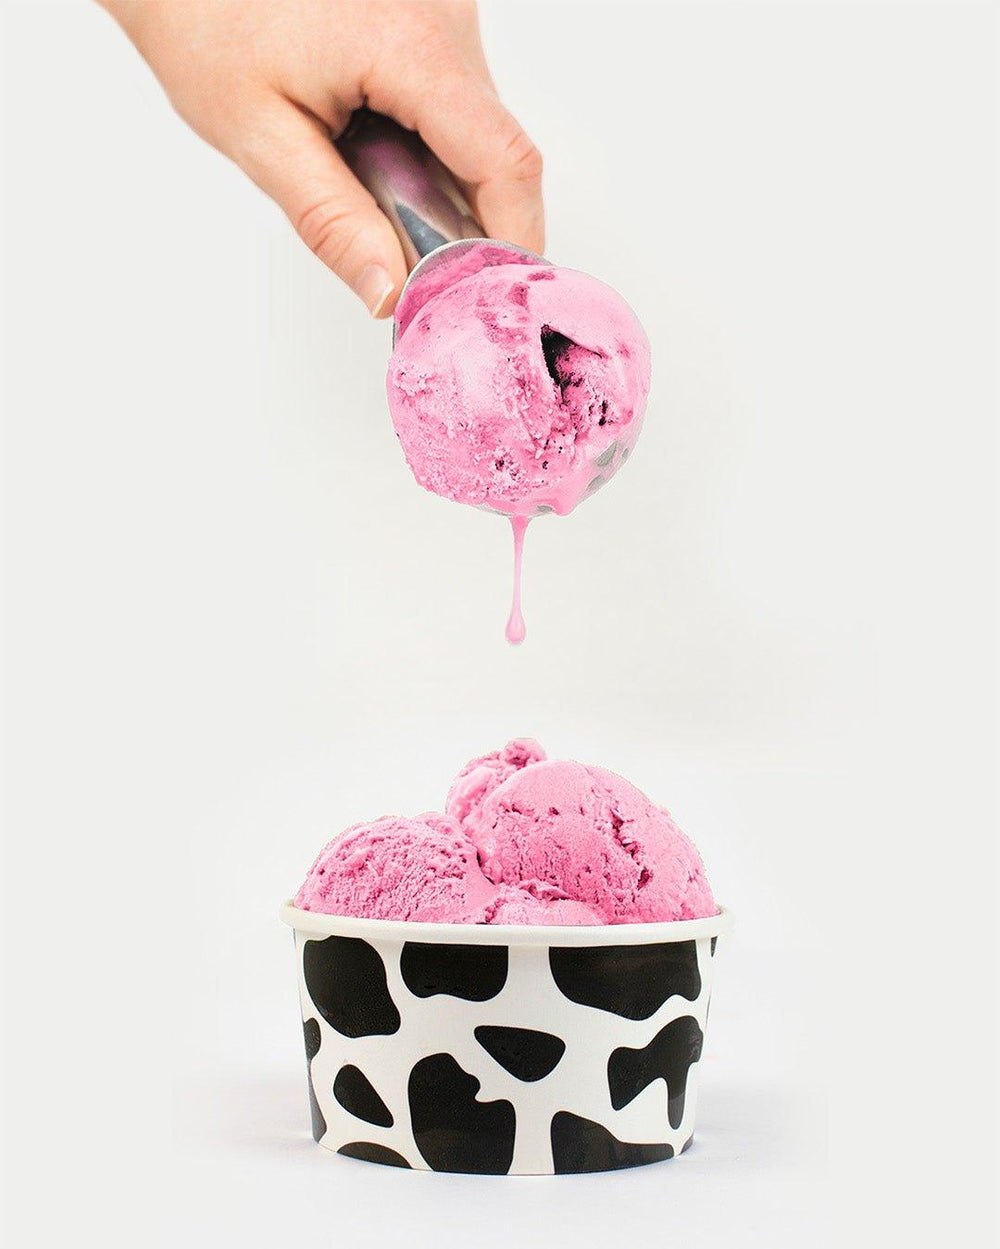 UNIQIFY® 6 oz Cowabunga Black Ice Cream Cups - Frozen Dessert Supplies 06COWBLCKM